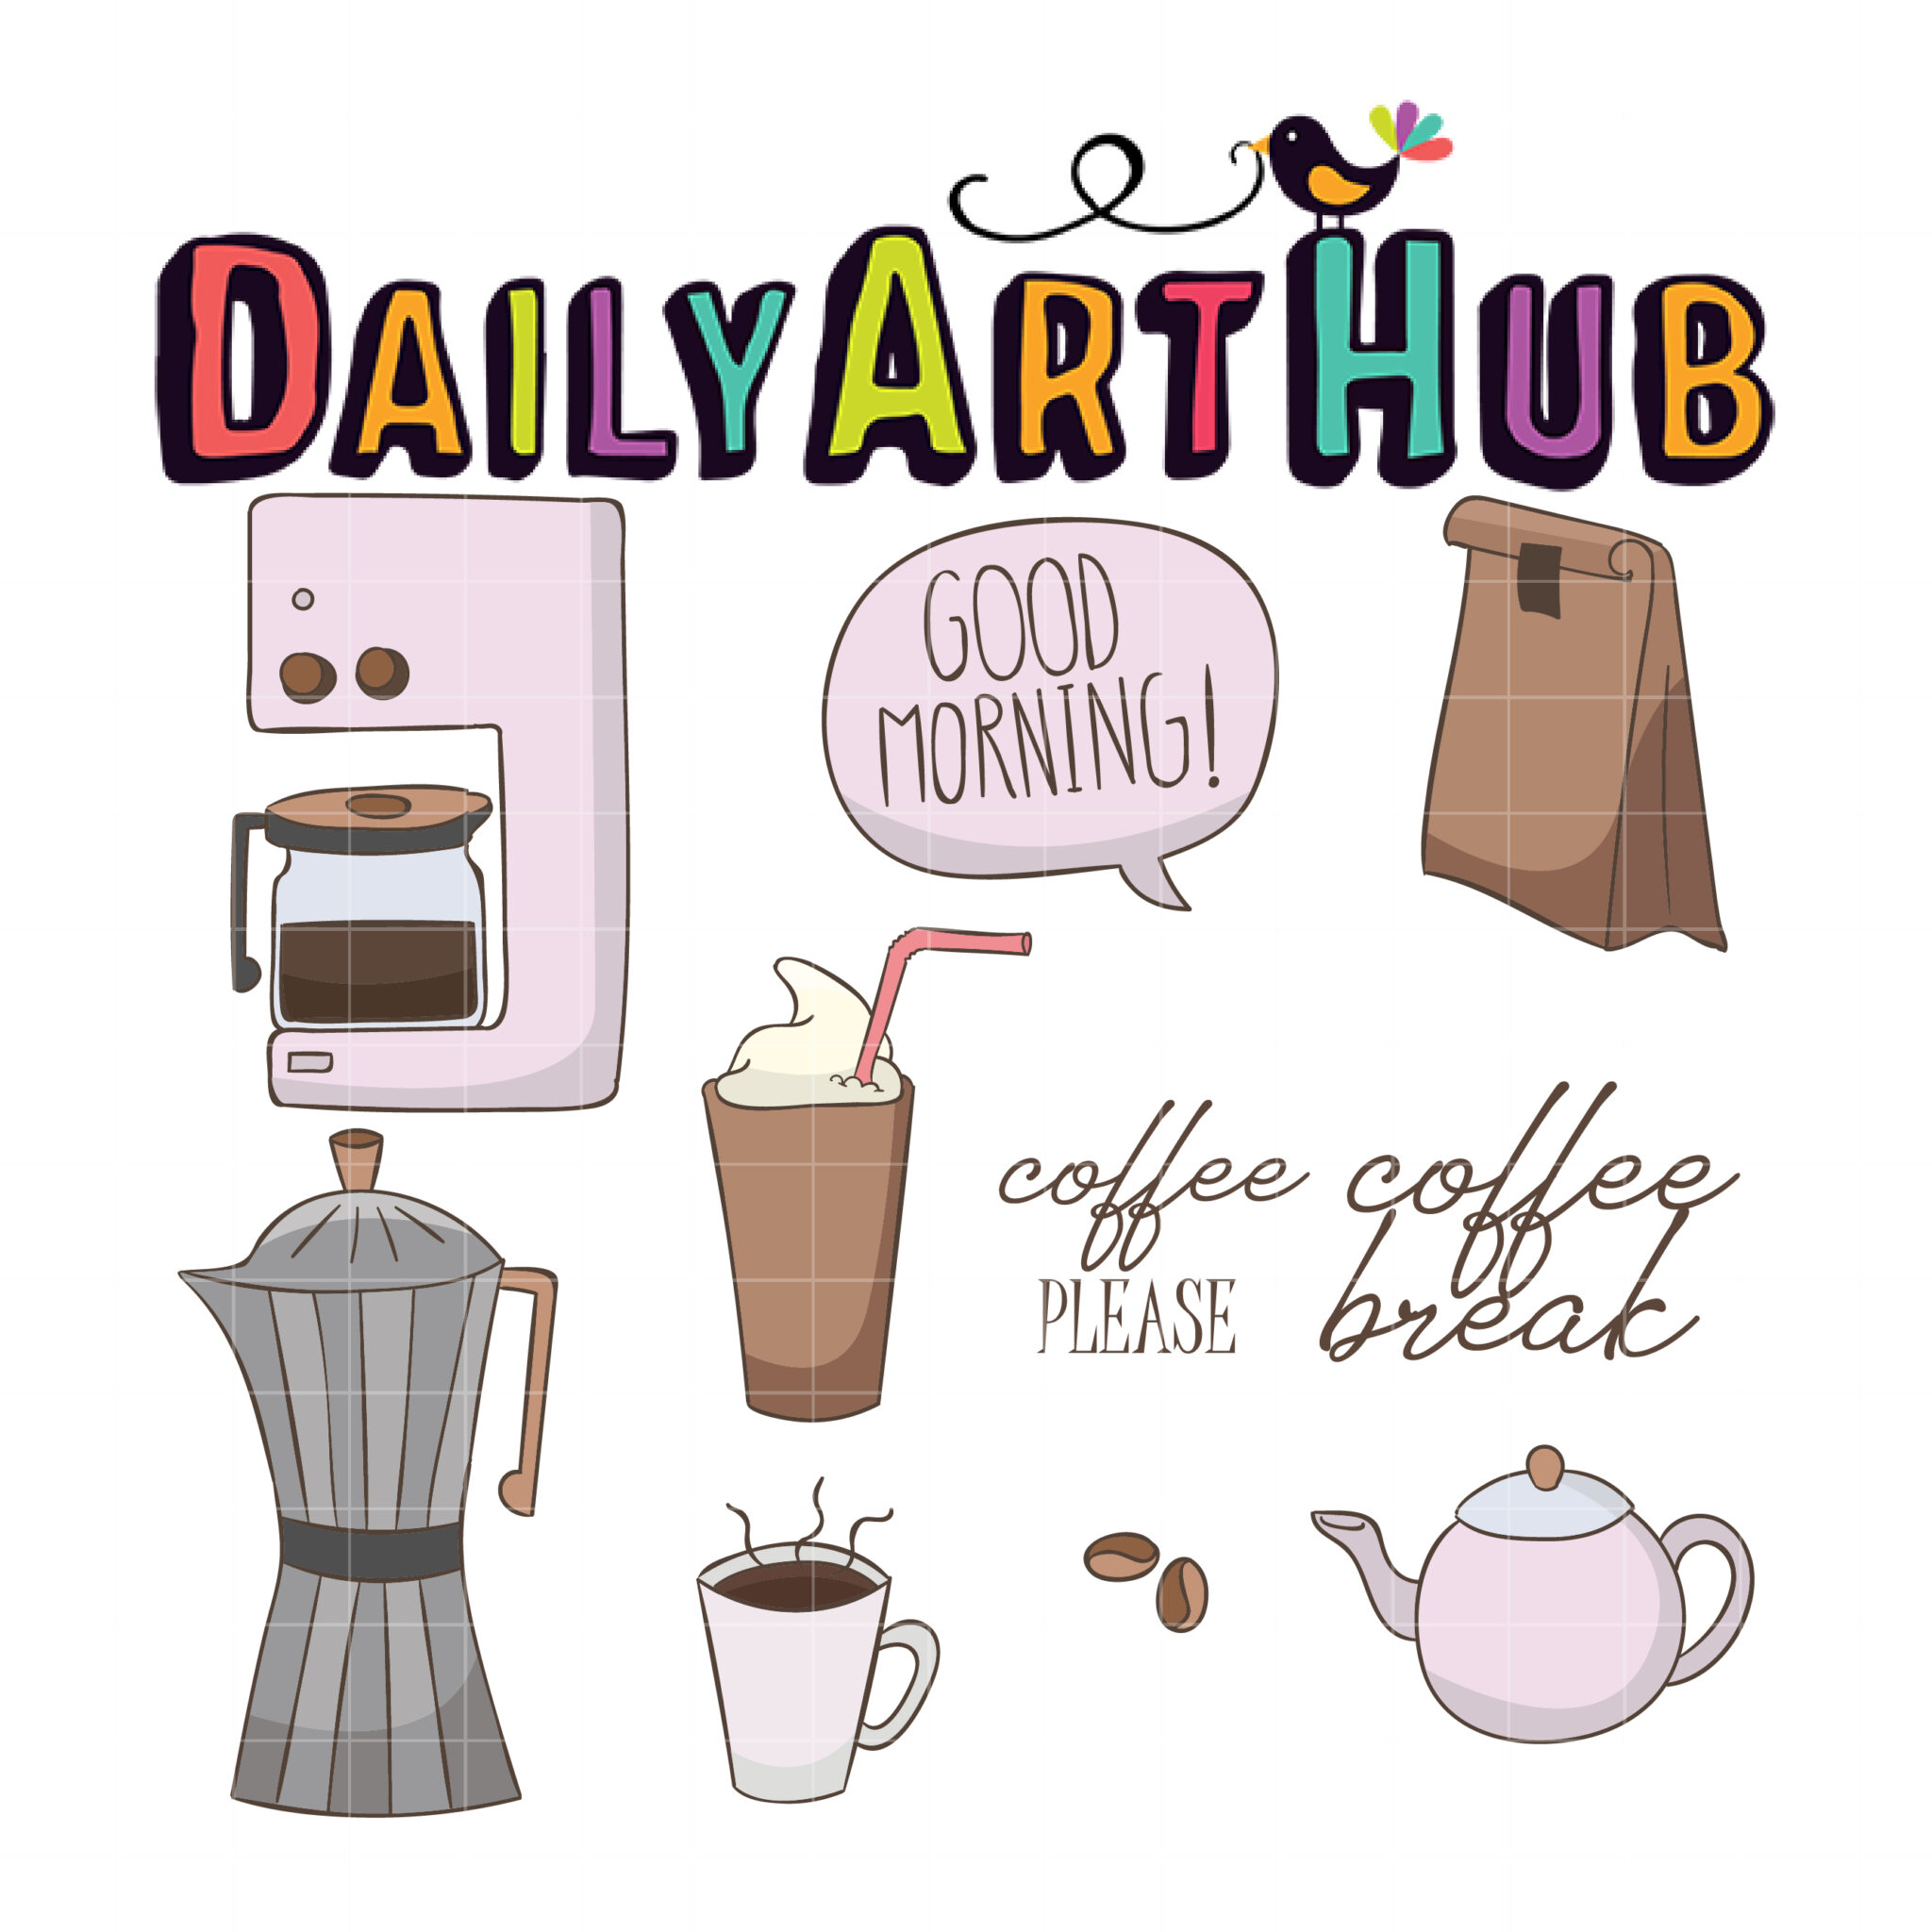 https://www.dailyarthub.com/wp-content/uploads/2020/05/Cute-Coffee-Illustration-scaled.jpg